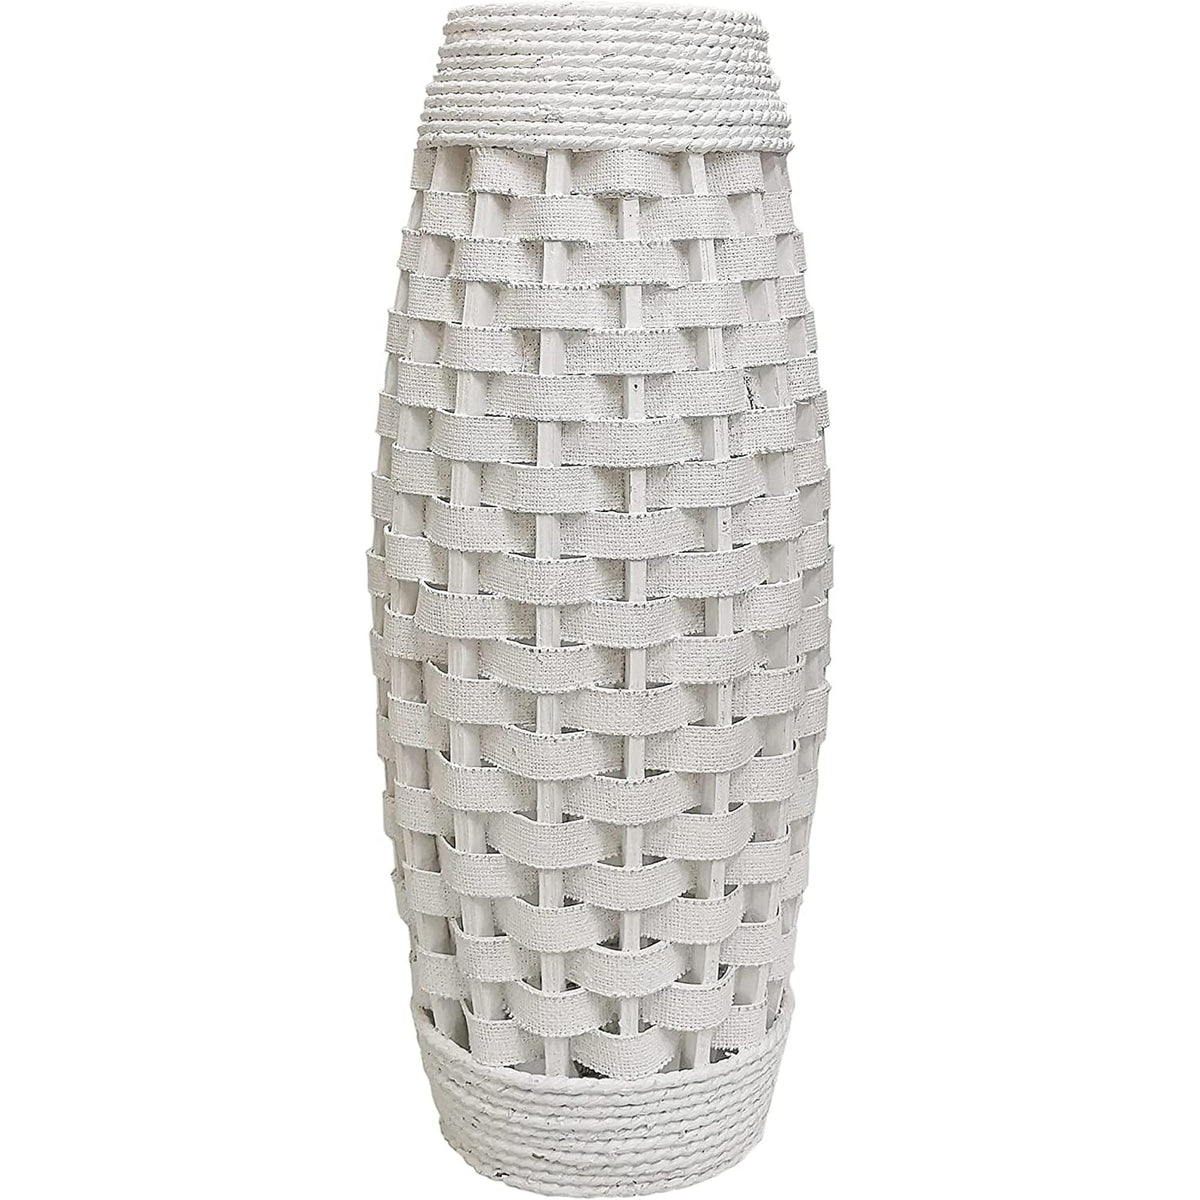 HOSLEY®  Natural Weaving Floor Vase,   White finish,   24 inches High